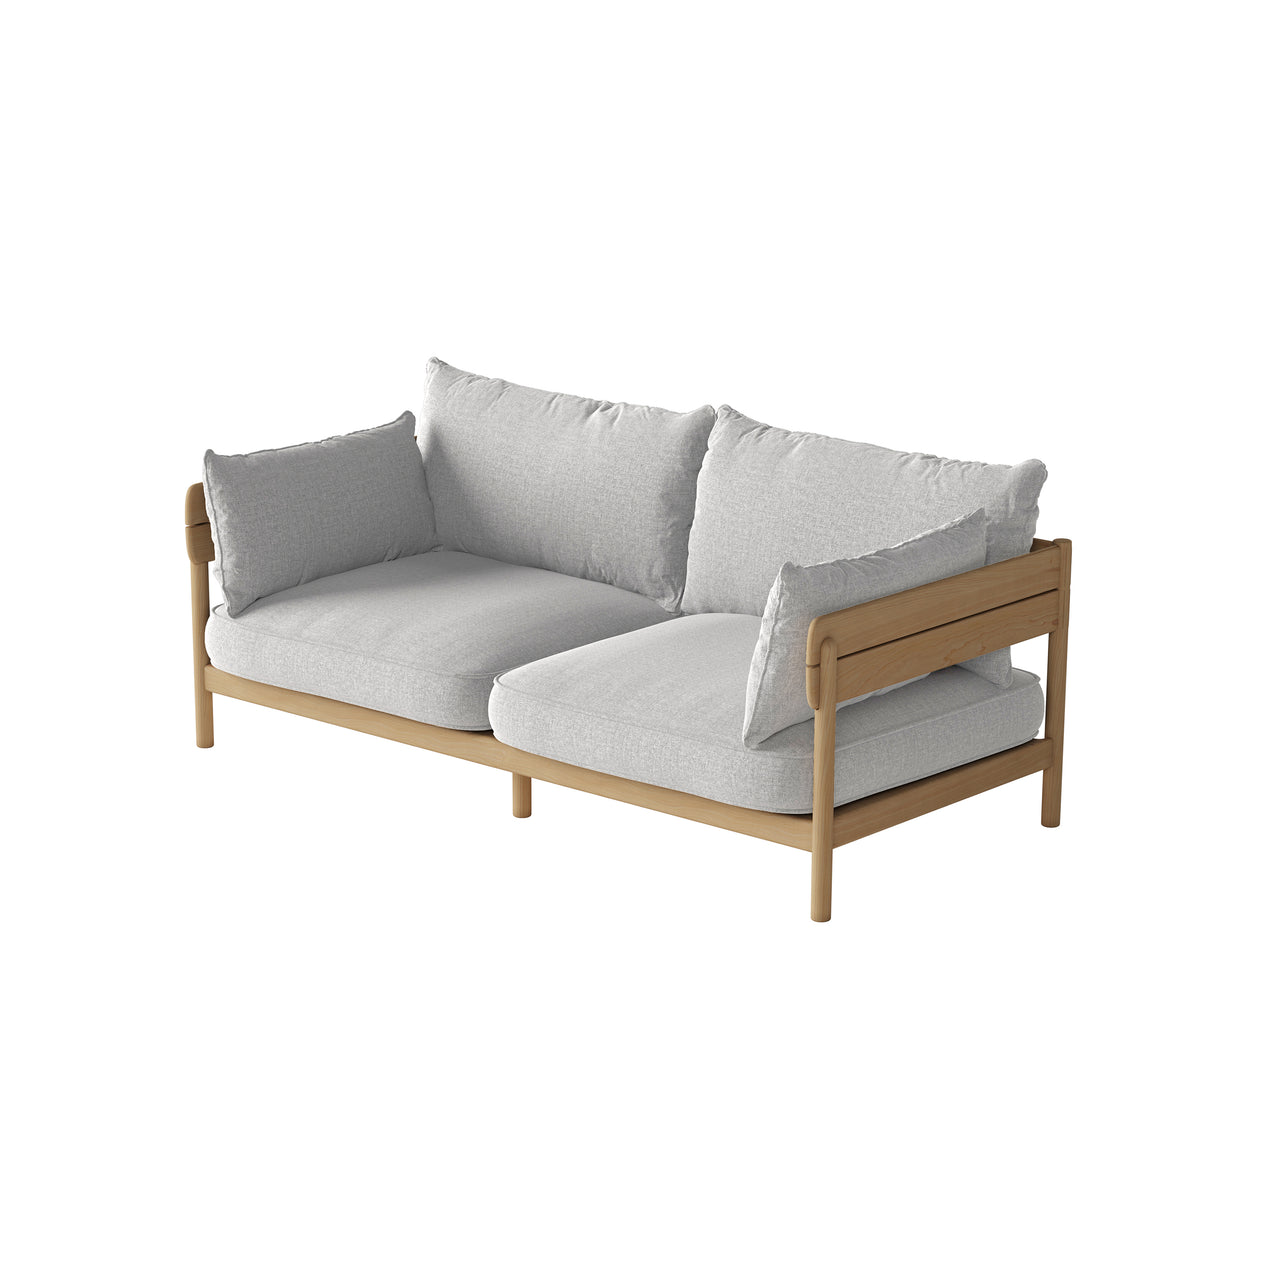 Tanso Sofa: 2 Seater